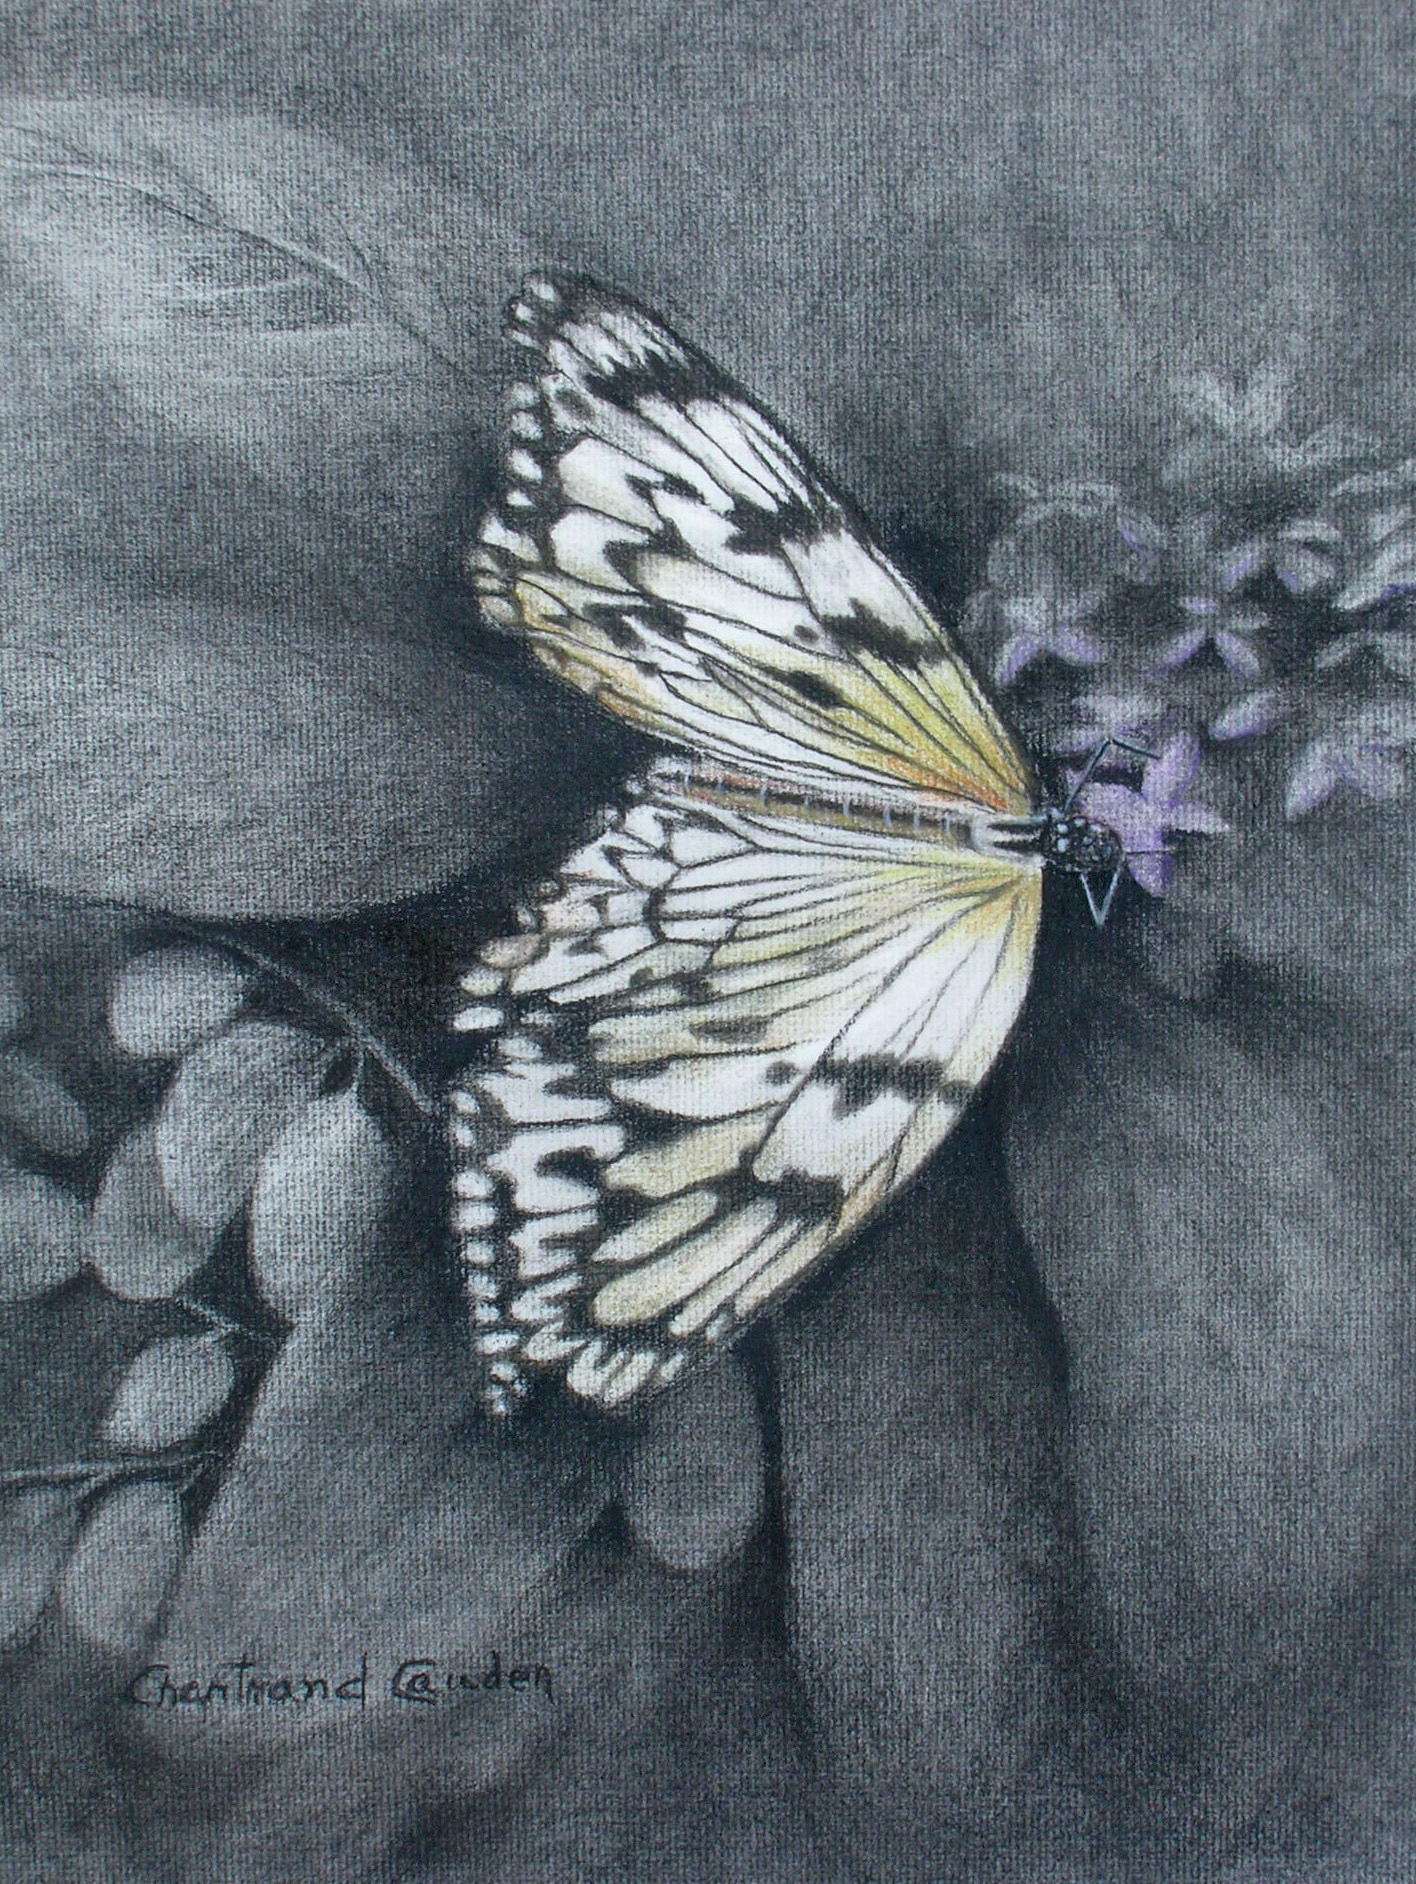 Papillon
Fusain 16" x 13"